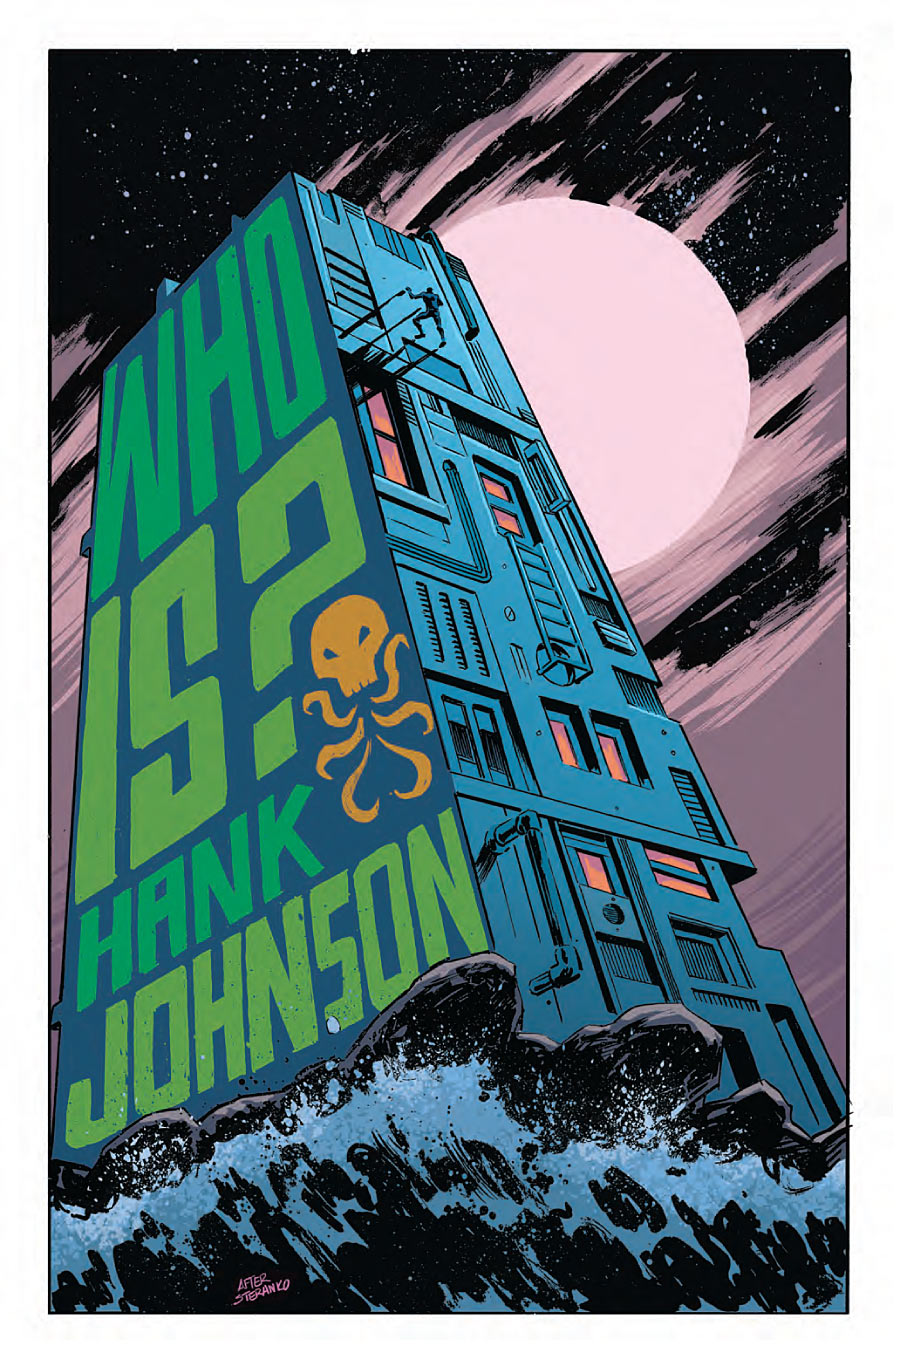 Hank Johnson, Agent of Hydra